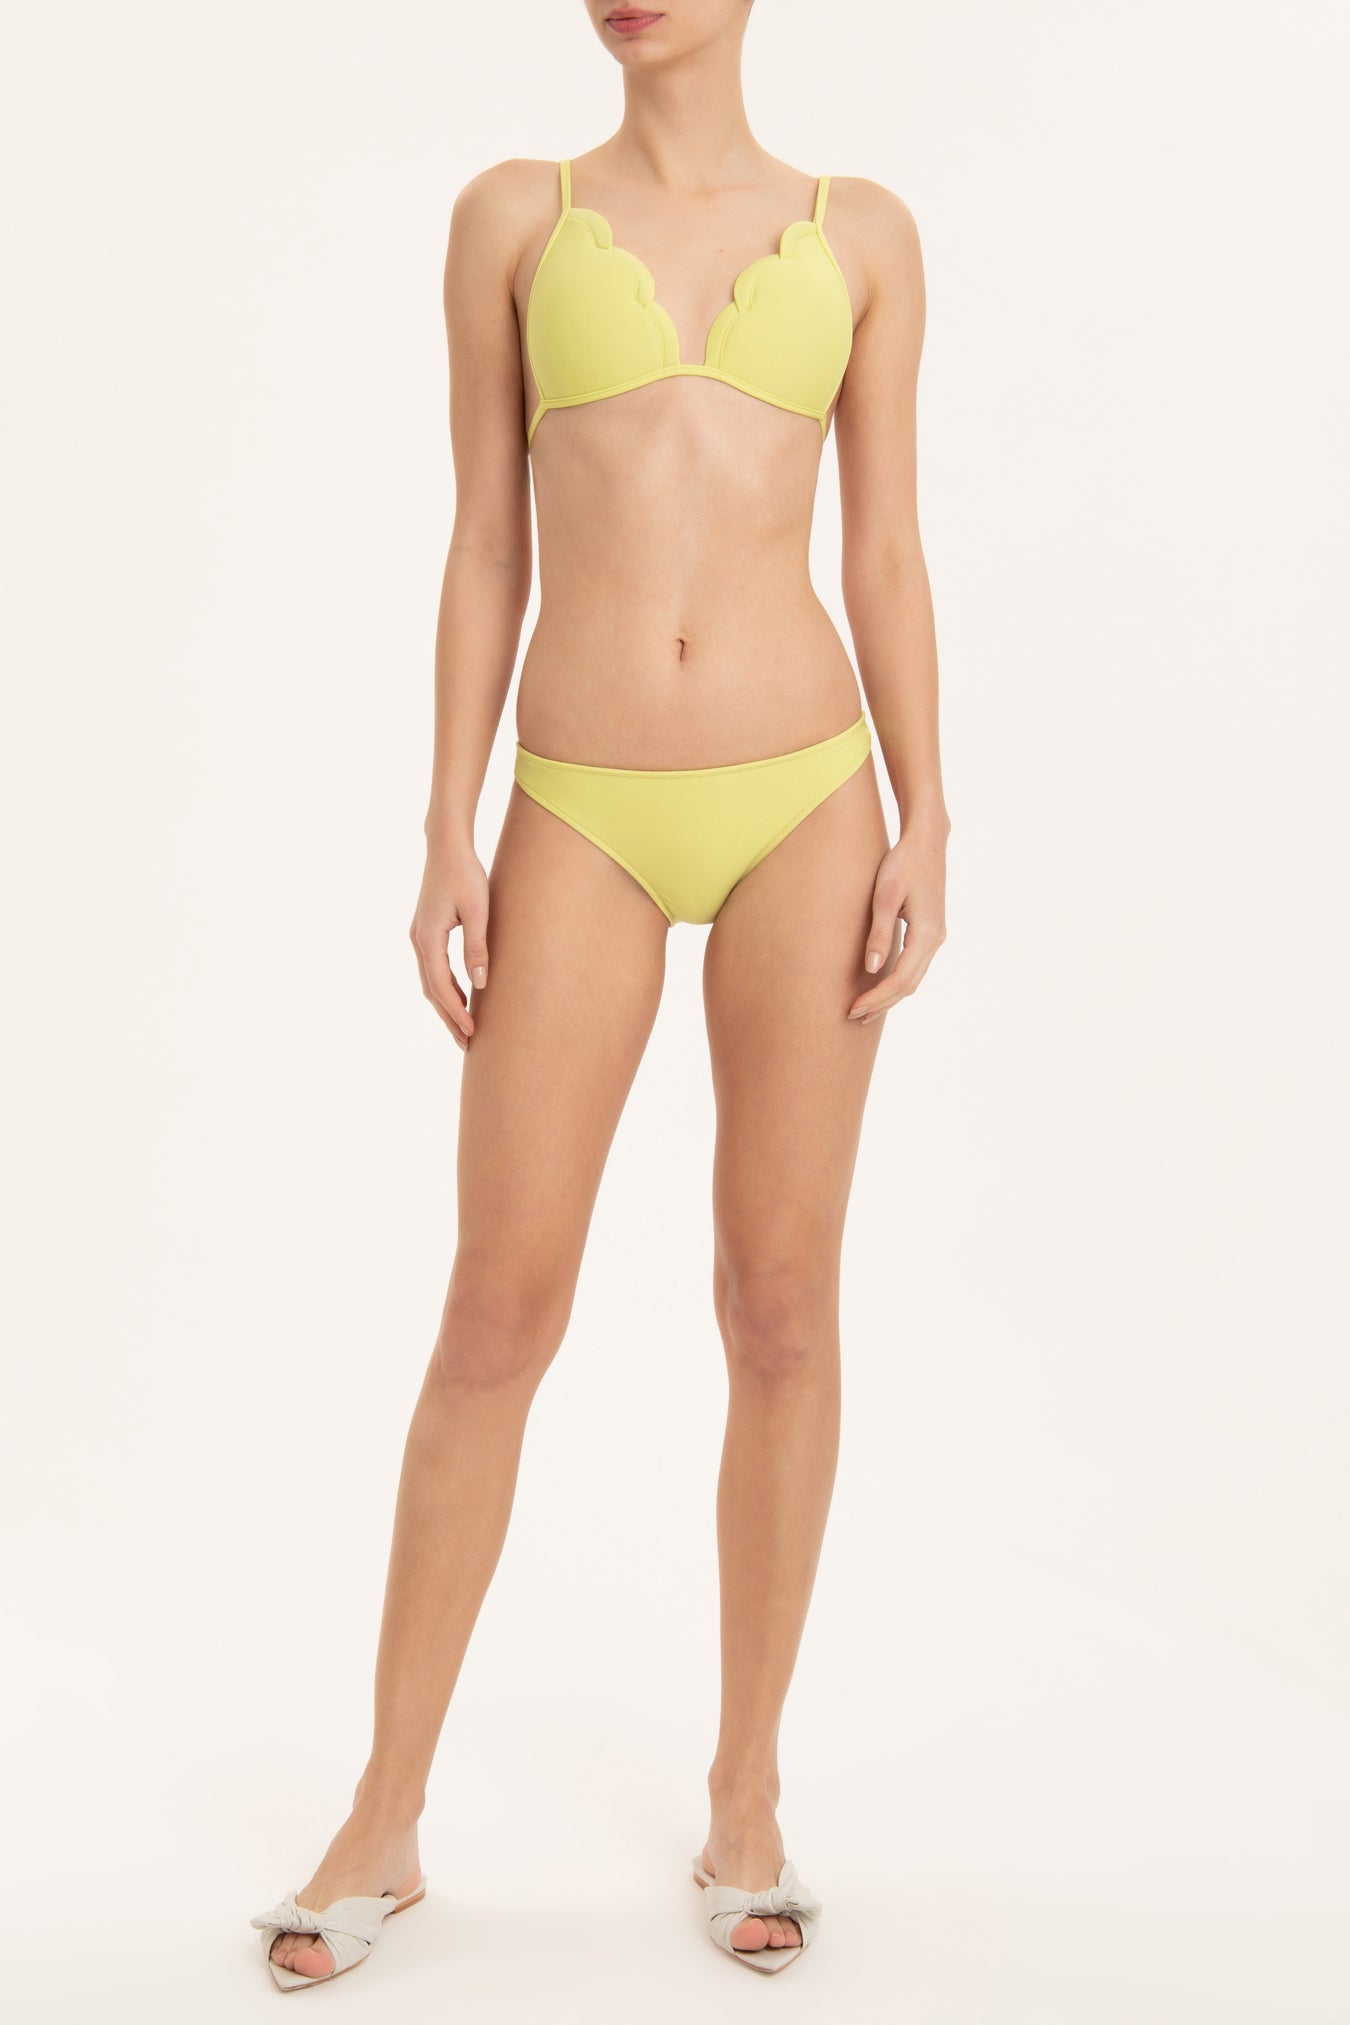 Solid Citrus Bikini With Straps Front